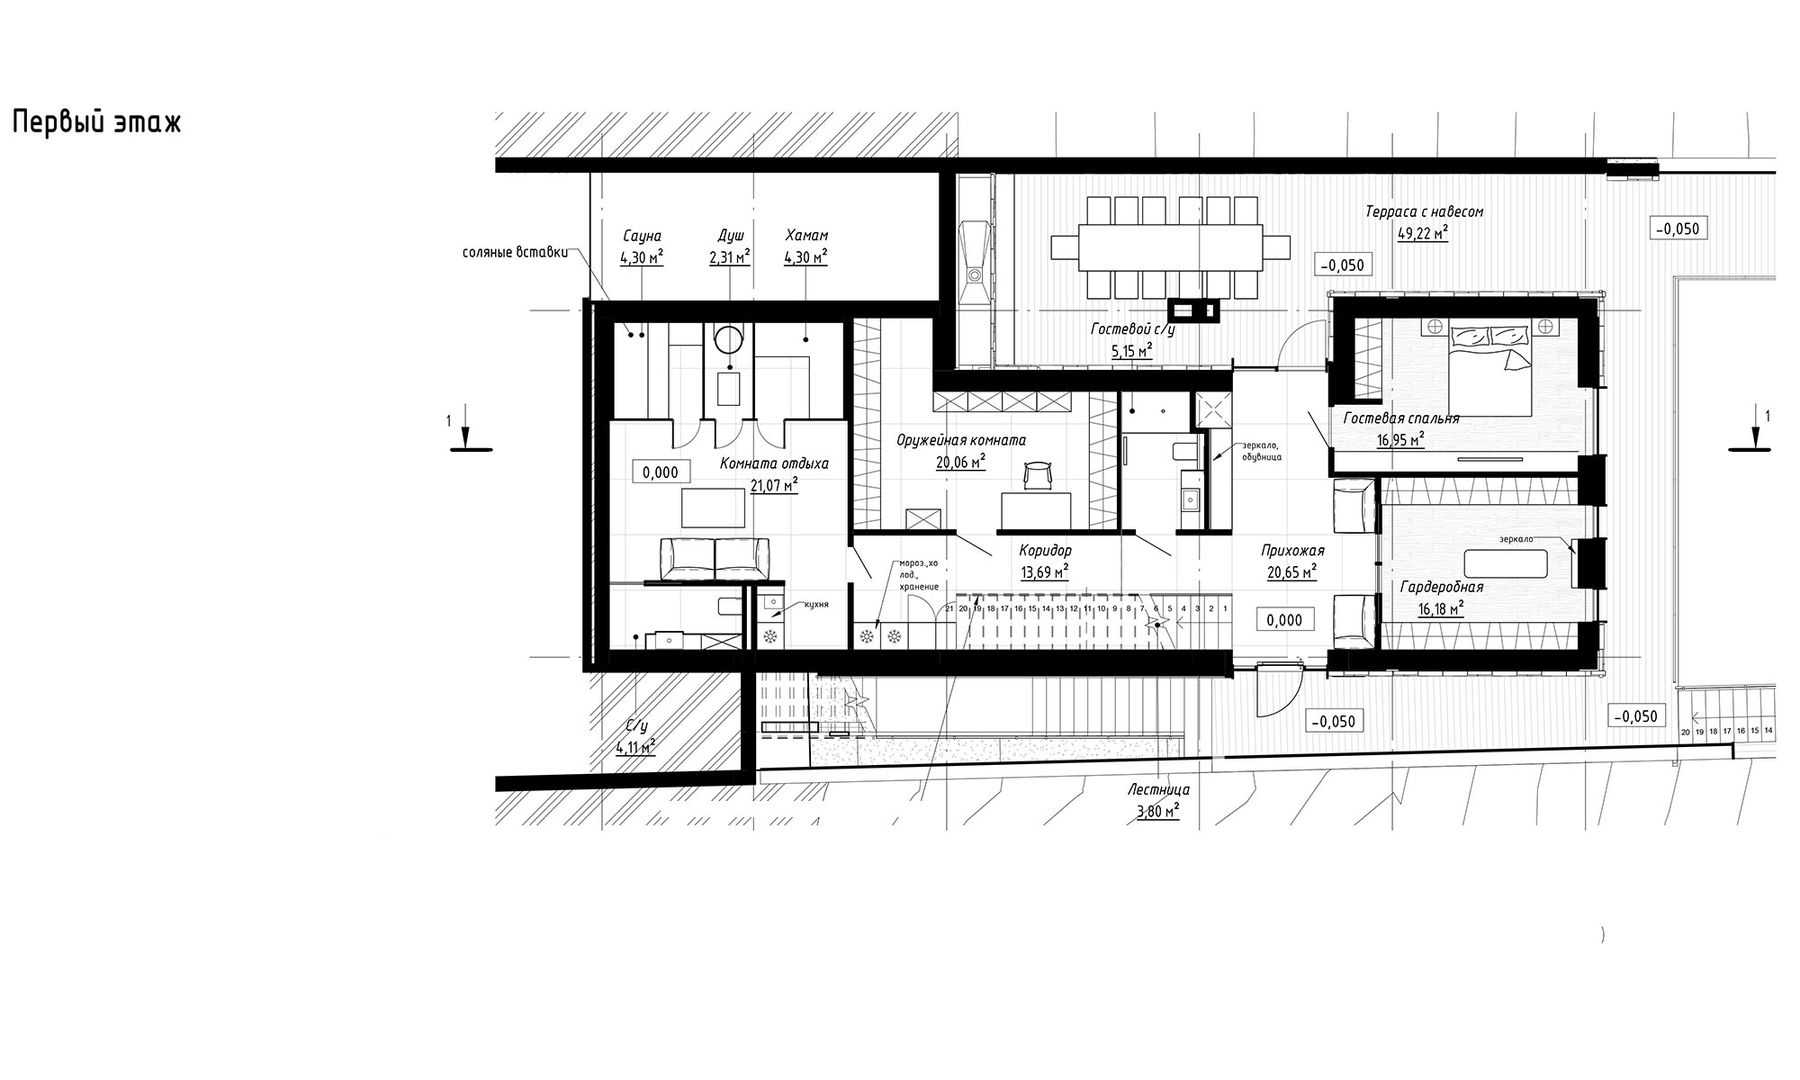 FLY house / Частный дом в МО на берегу водохранилища BOOS architects plan